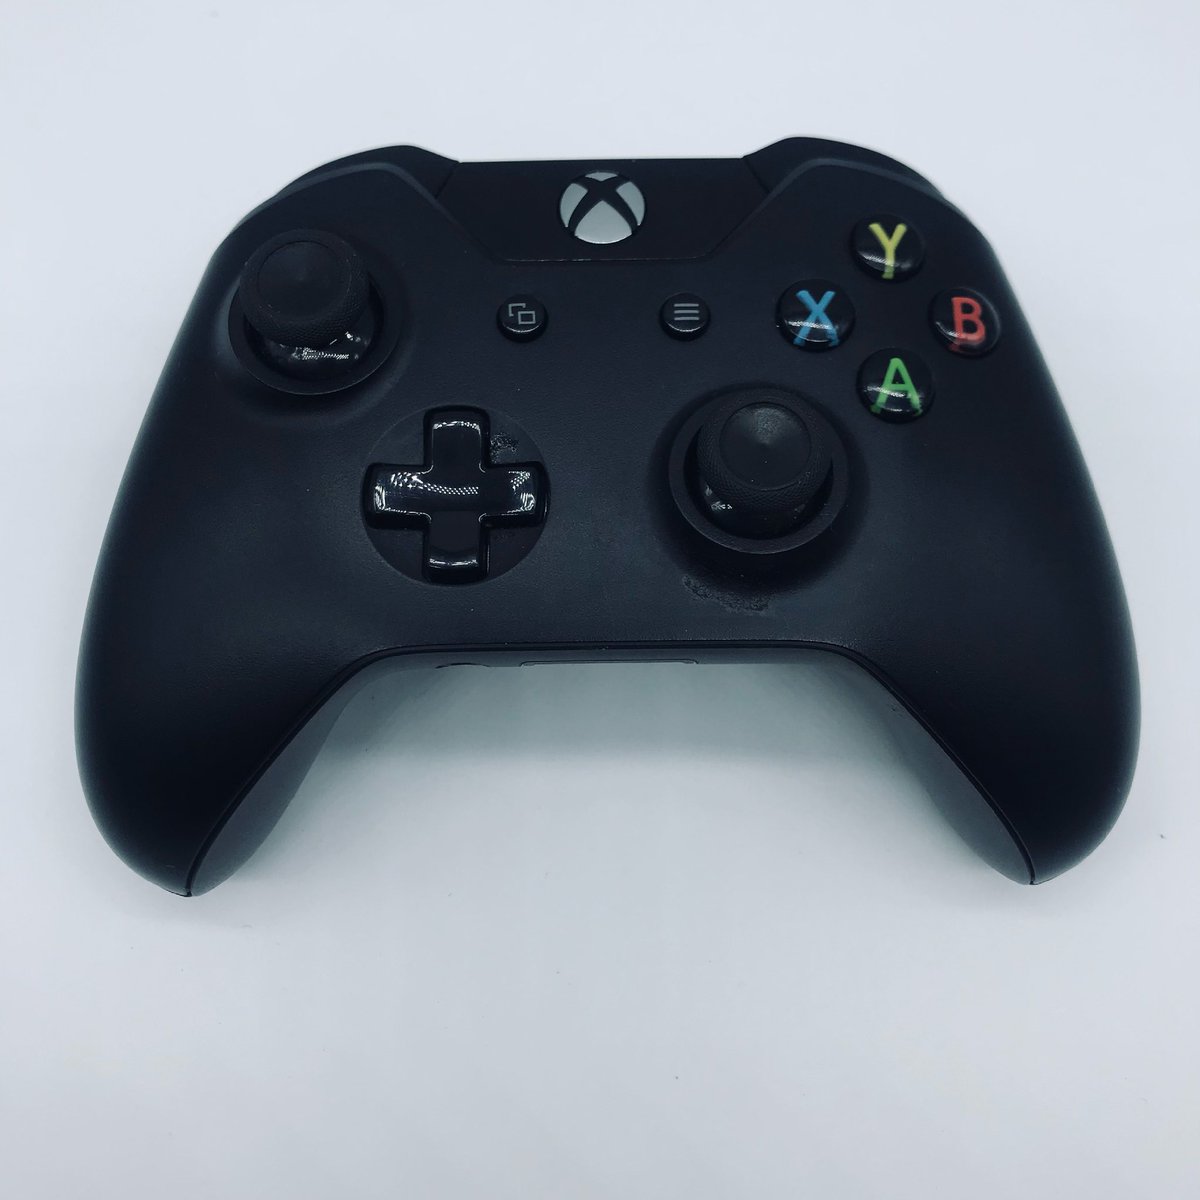 We’ve got Xbox One Wireless Controllers back in stock!
unlockedelectronicsstore.com/shop/ols/produ…

#xbox #XboxOne #gaming #GamingAccessories #follow #followus #electronicsstore #videogames #pcgaming #xboxonecontroller #gamingcontroller